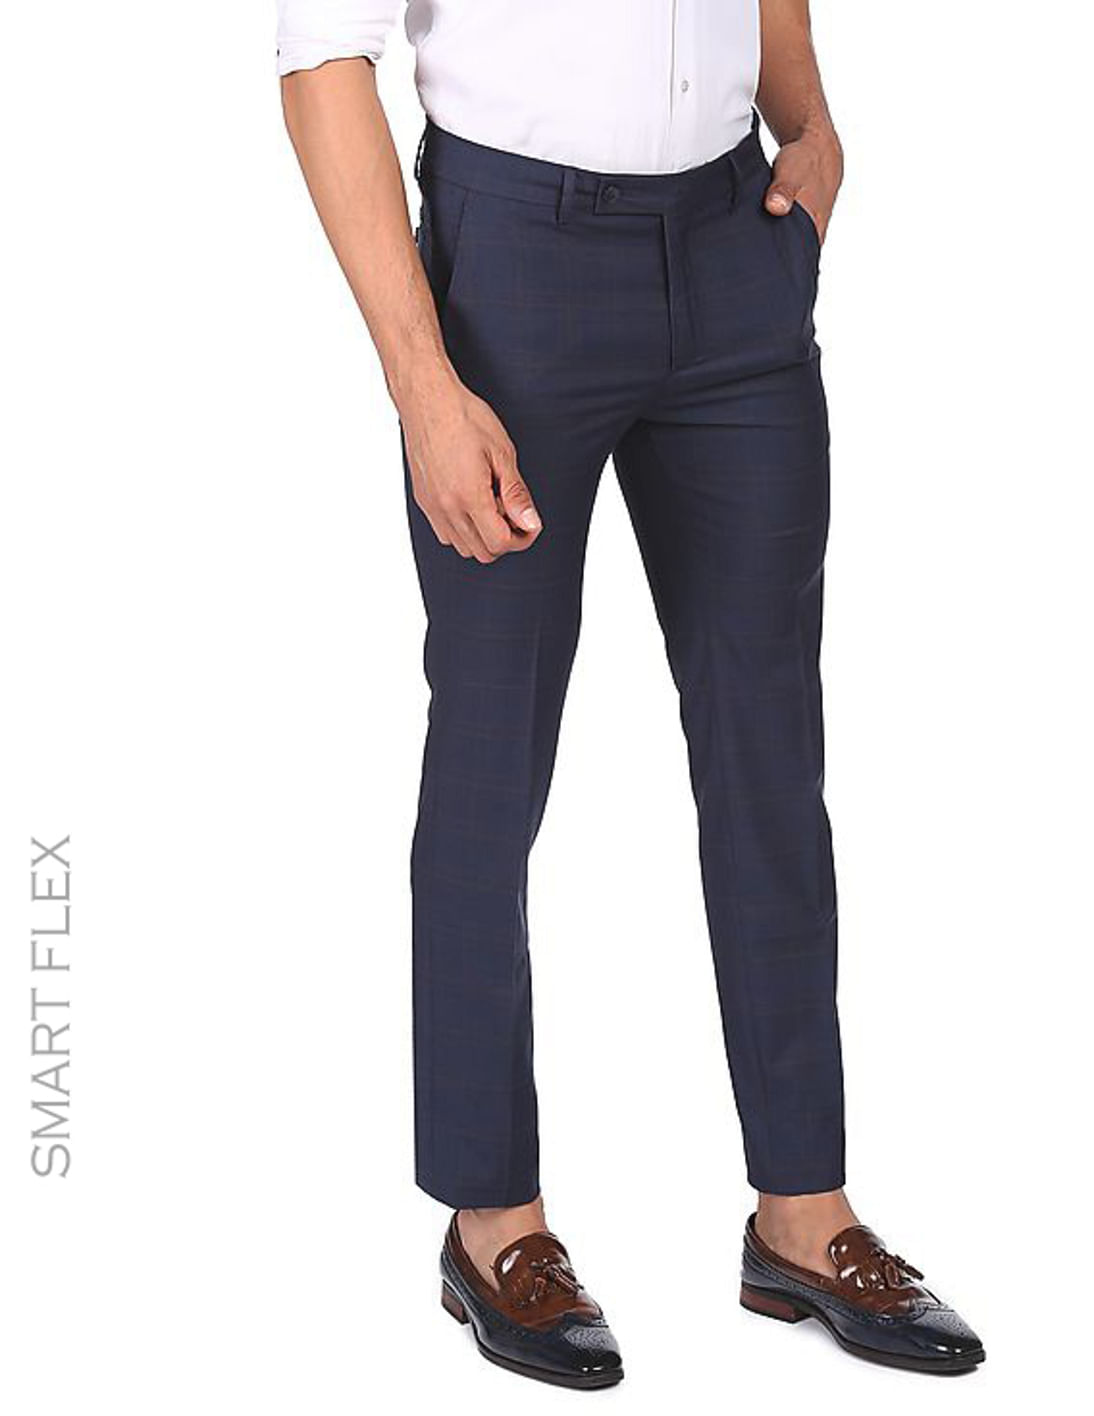 Slim Fit Men Black Trousers Price in India  Buy Slim Fit Men Black Trousers  online at Shopsyin